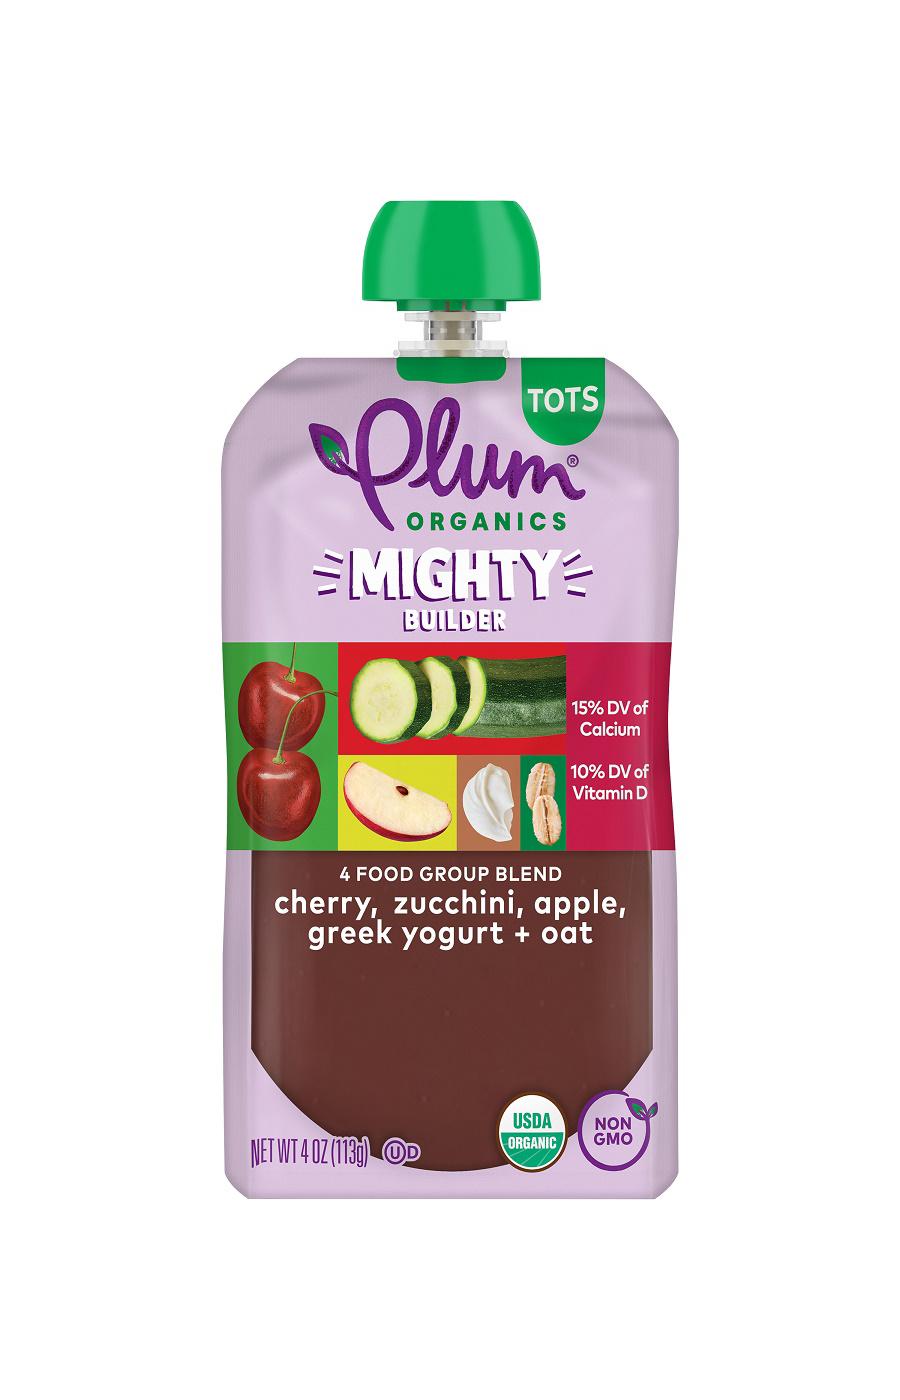 Plum Organics Mighty Builder Pouch - Cherry, Zucchini, Apple, Greek Yogurt + Oat; image 1 of 2